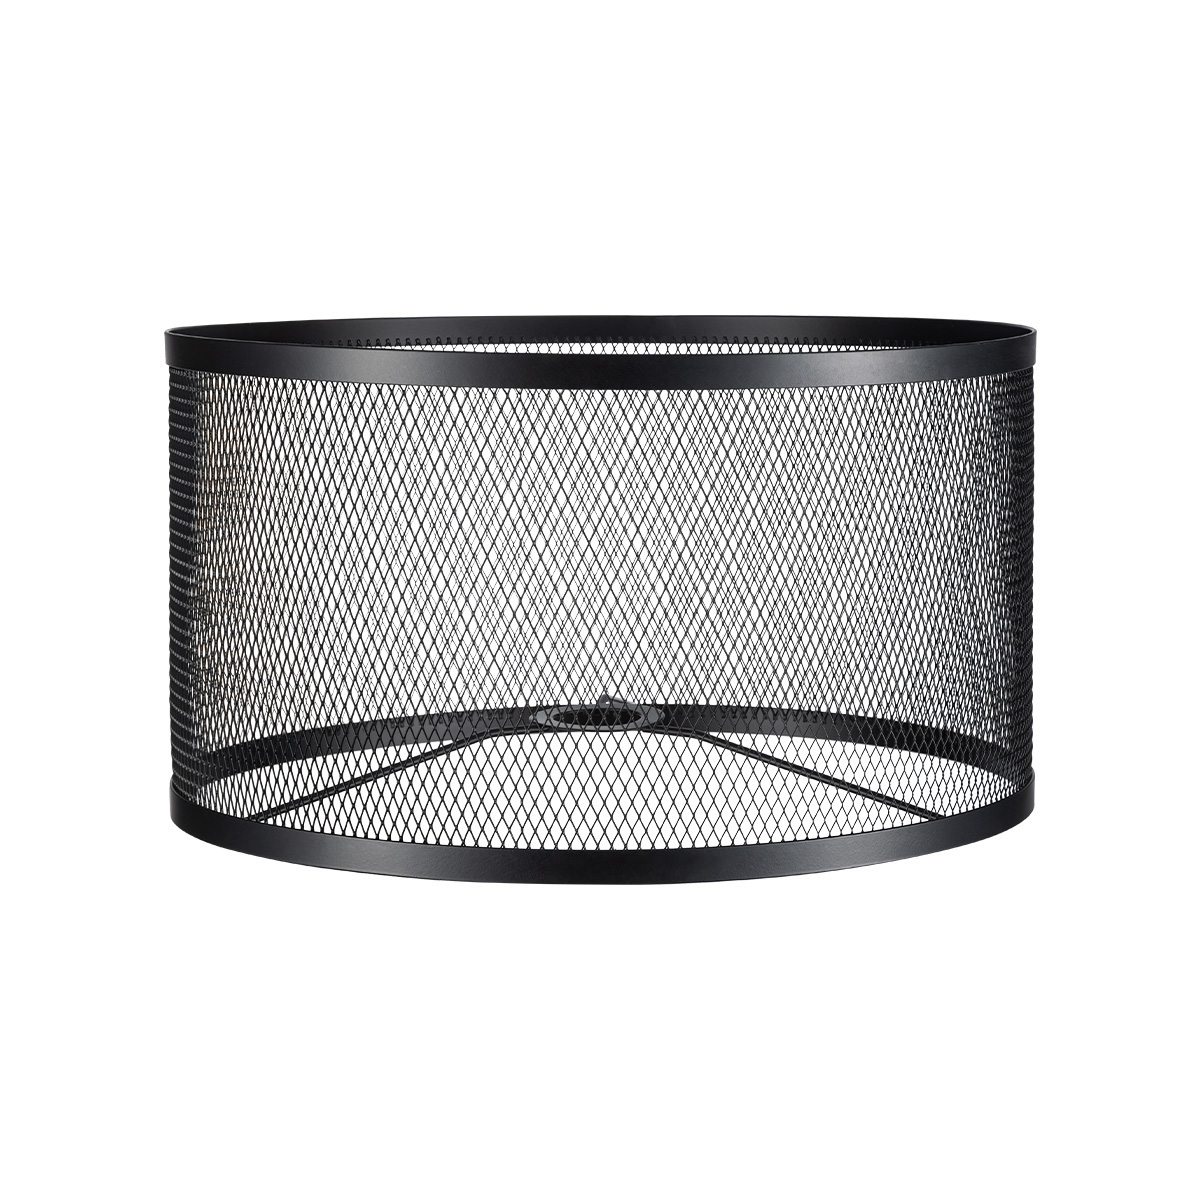 Tangla lighting - TLS7646-40BK - Decorative Lampshade - metal wire mesh in black - industrial black - Φ40cm - E27